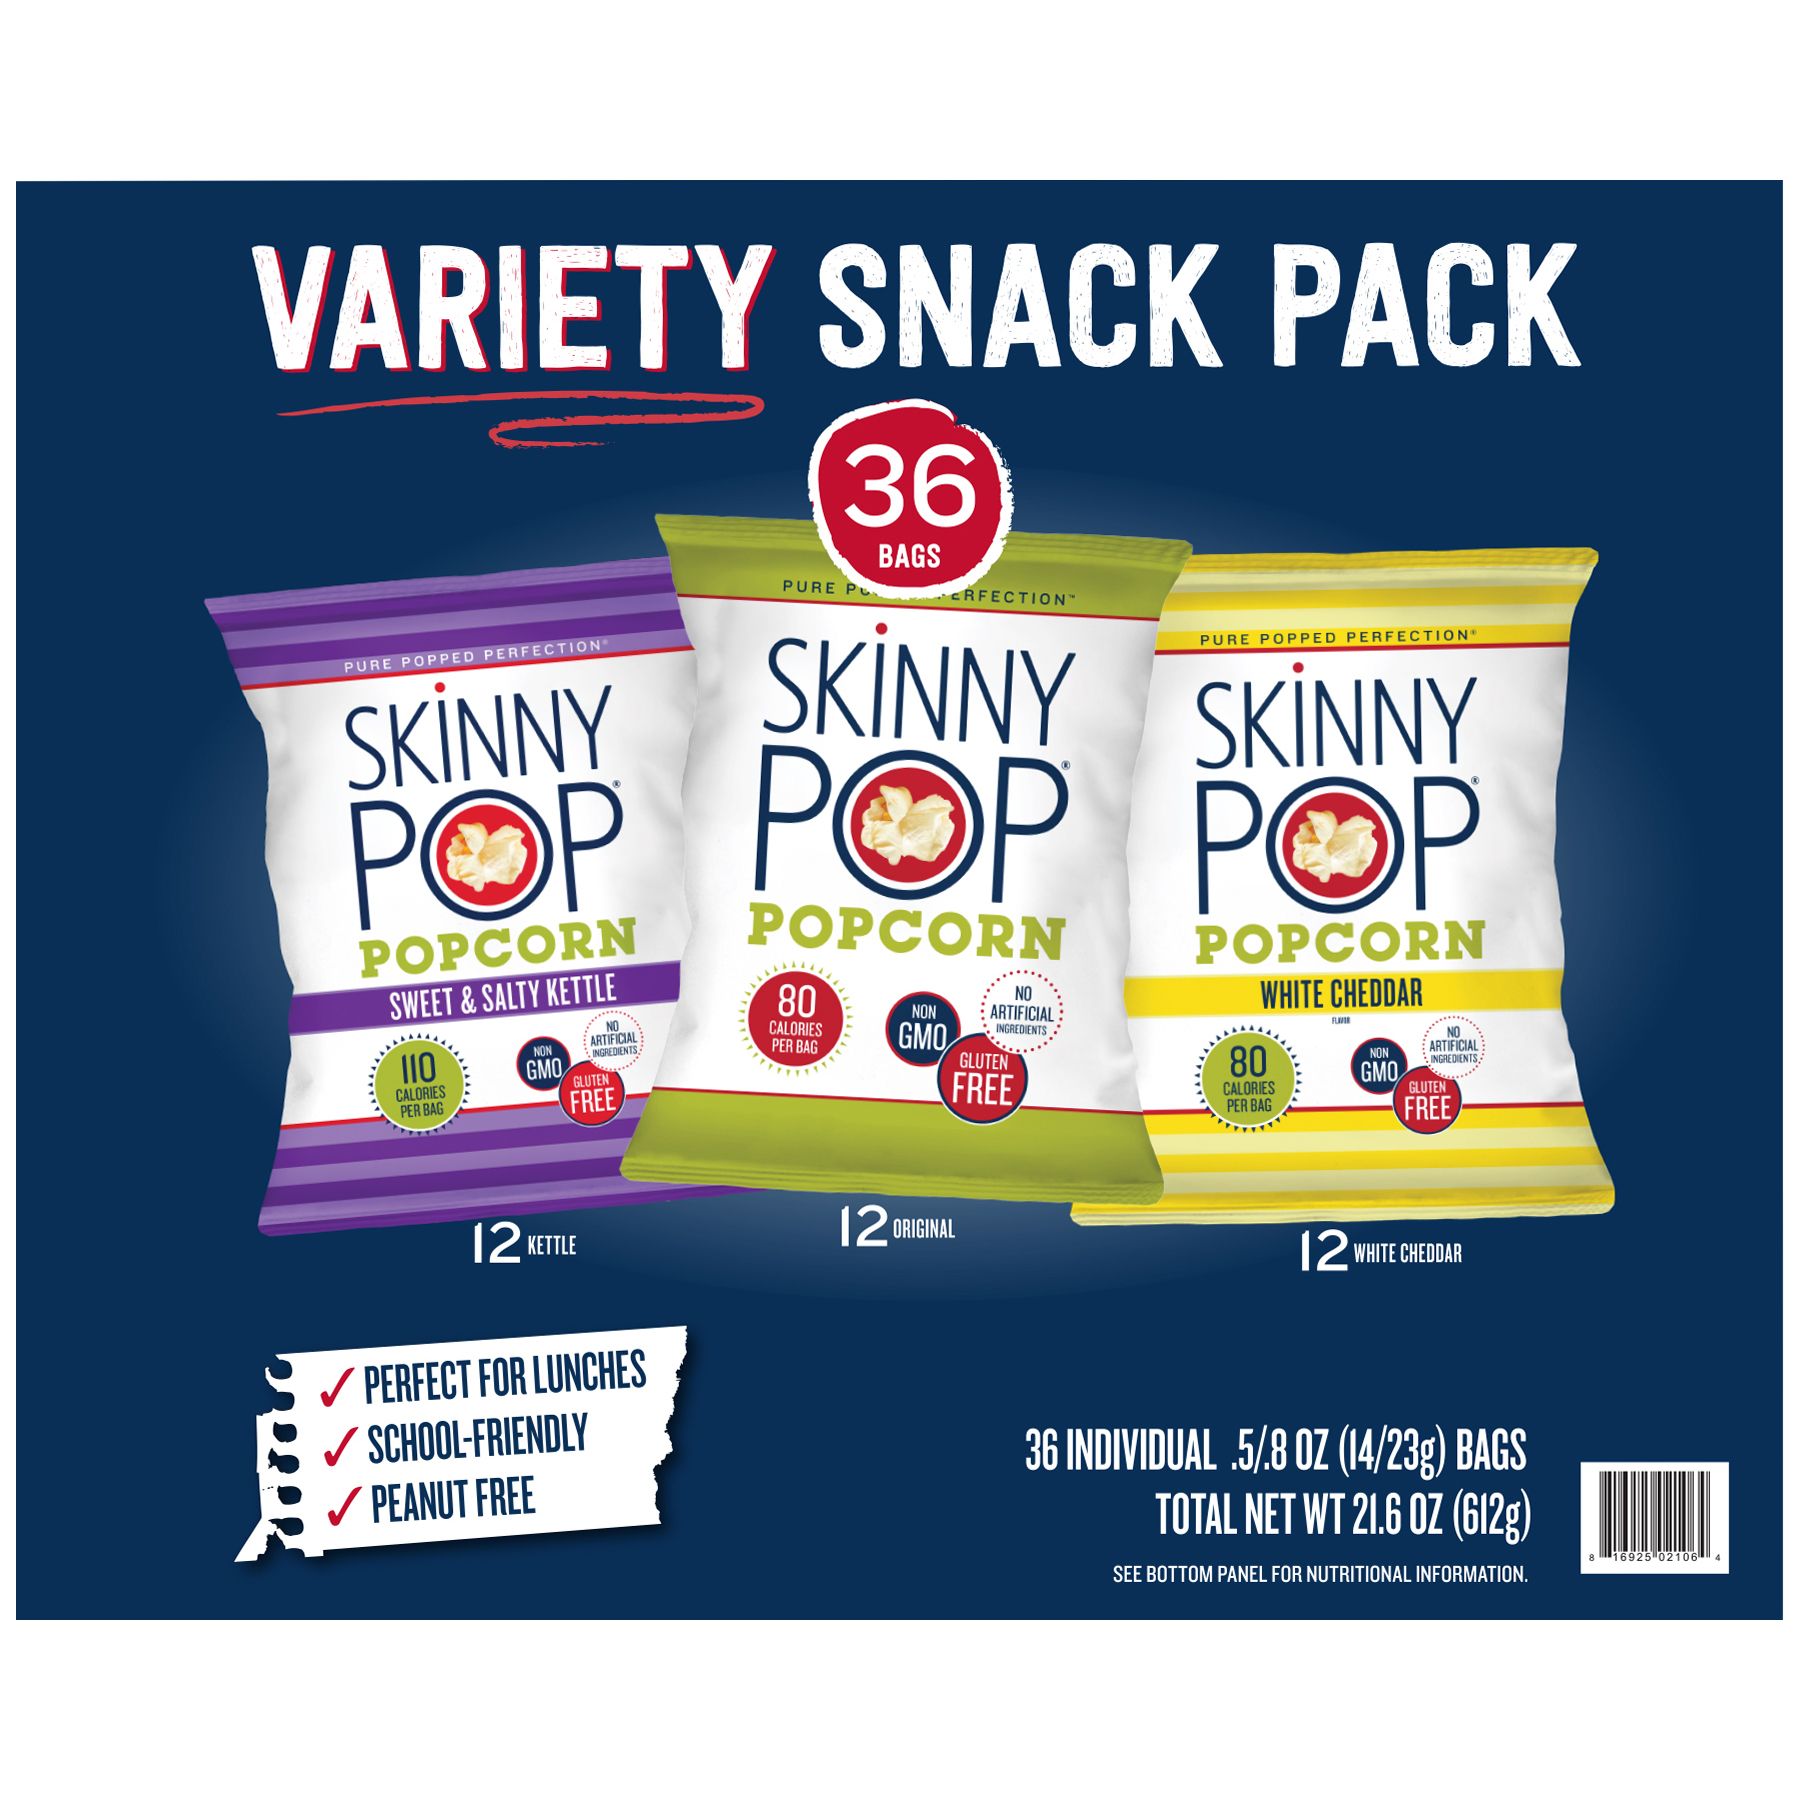 SkinnyPop Original Popcorn, Individual Snack Size Bags, Skinny Pop, Healthy  Popcorn Snacks, Gluten Free, 0.65 Ounce (Pack of 30)